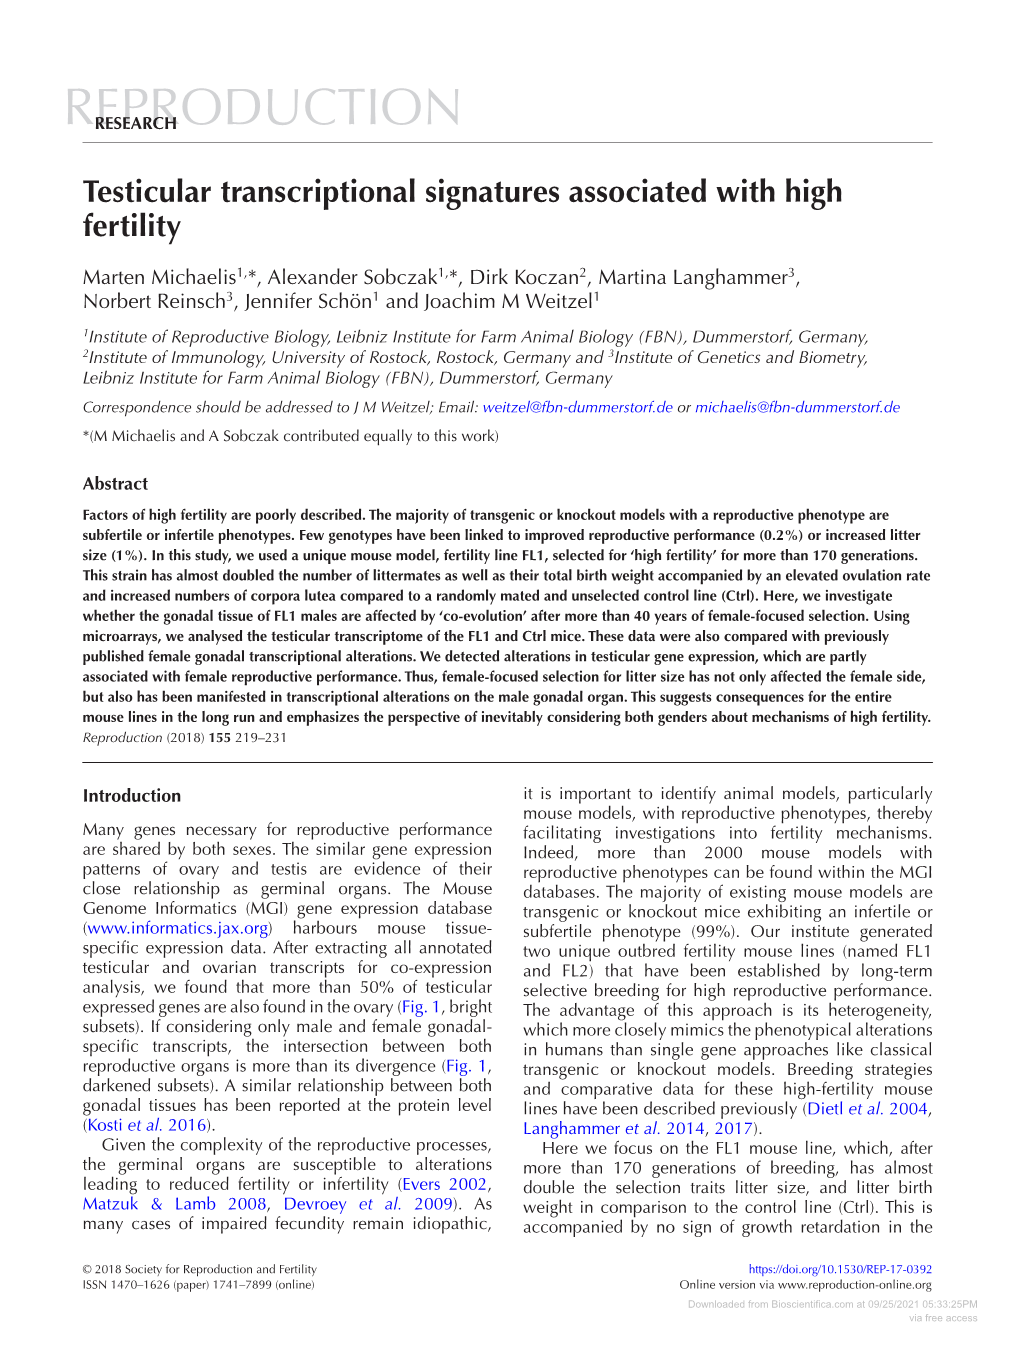 Testicular Transcriptional Signatures Associated with High Fertility